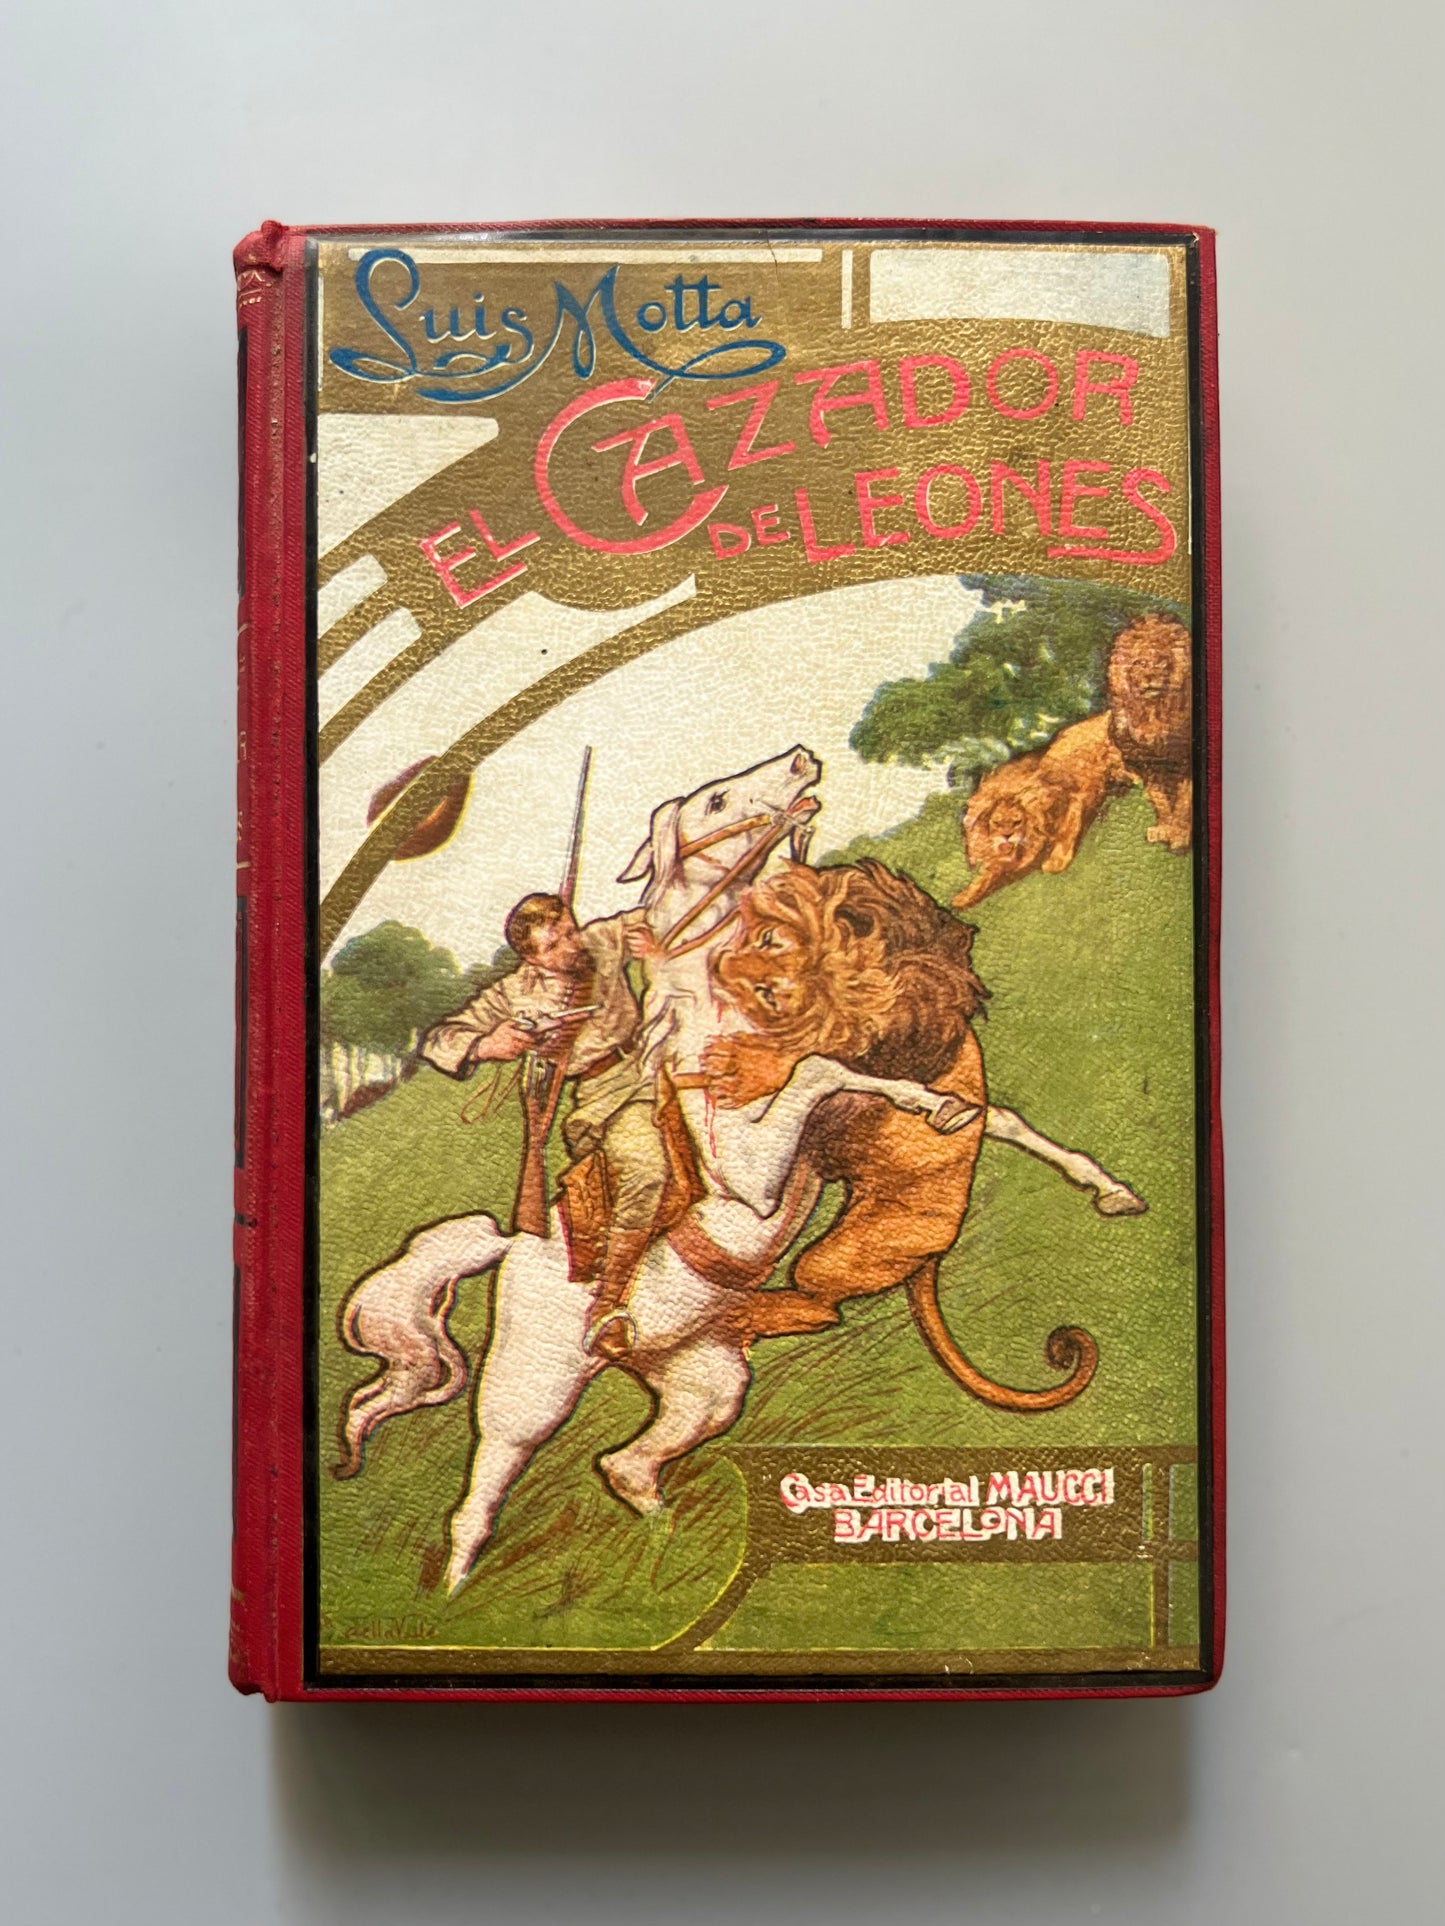 El cazador de leones, Cap. luigi Motta - Casa editorial Maucci, ca. 1910